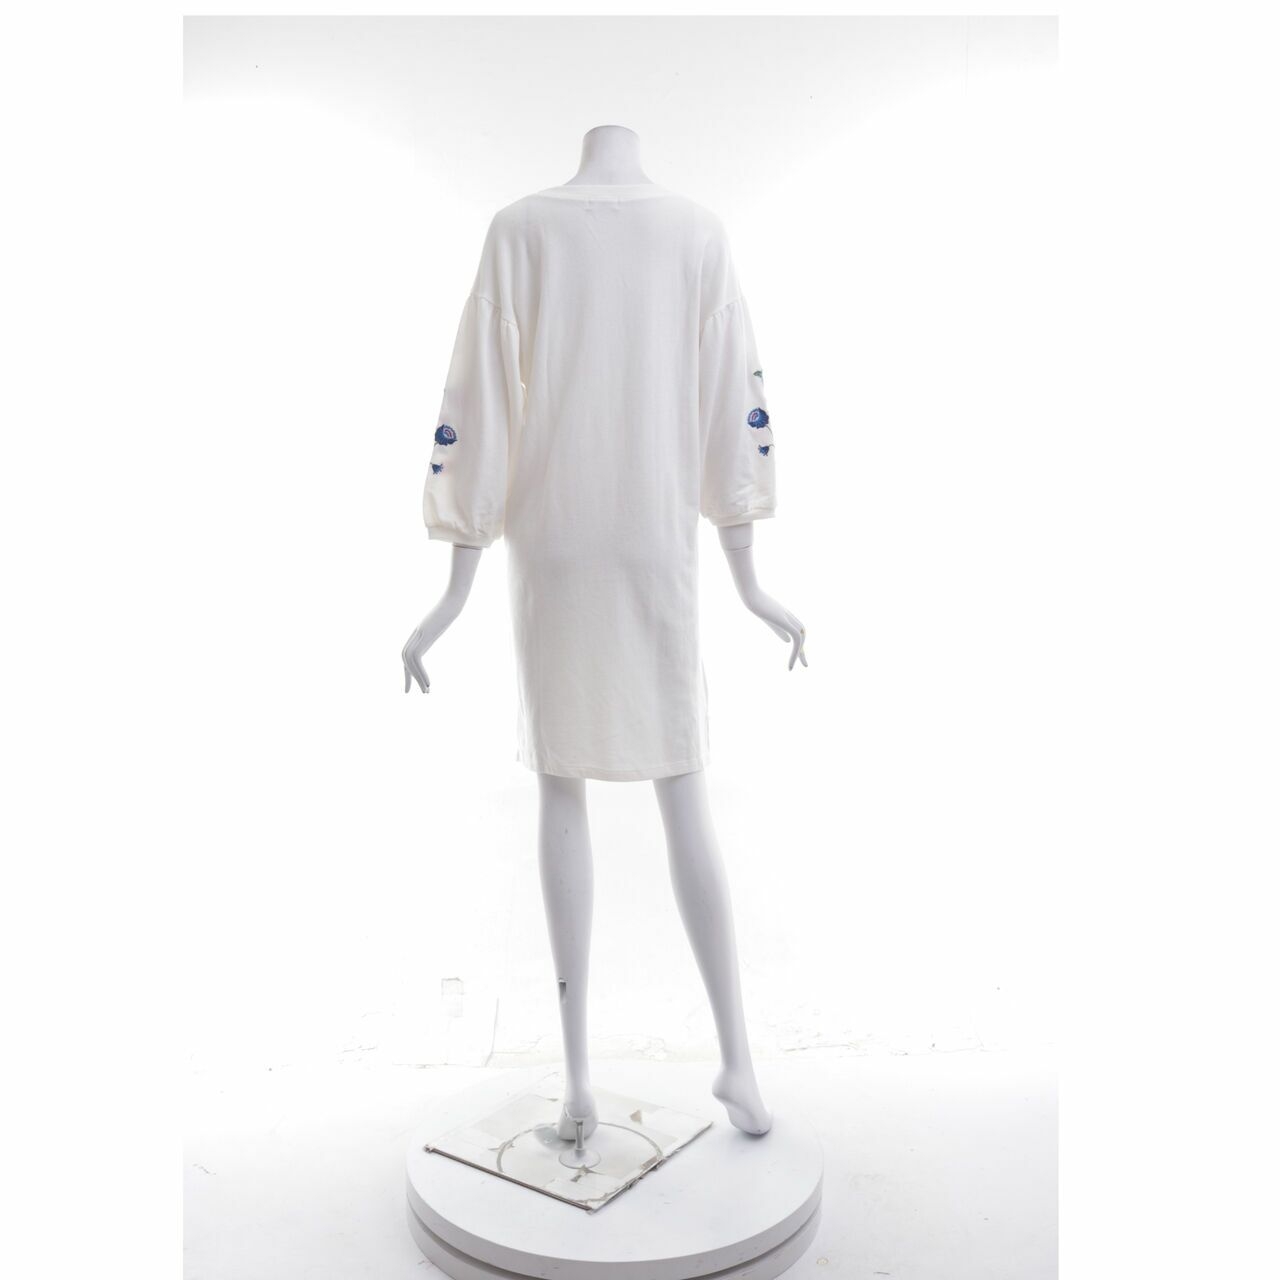 Dotti White Embroidered Tunic Blouse